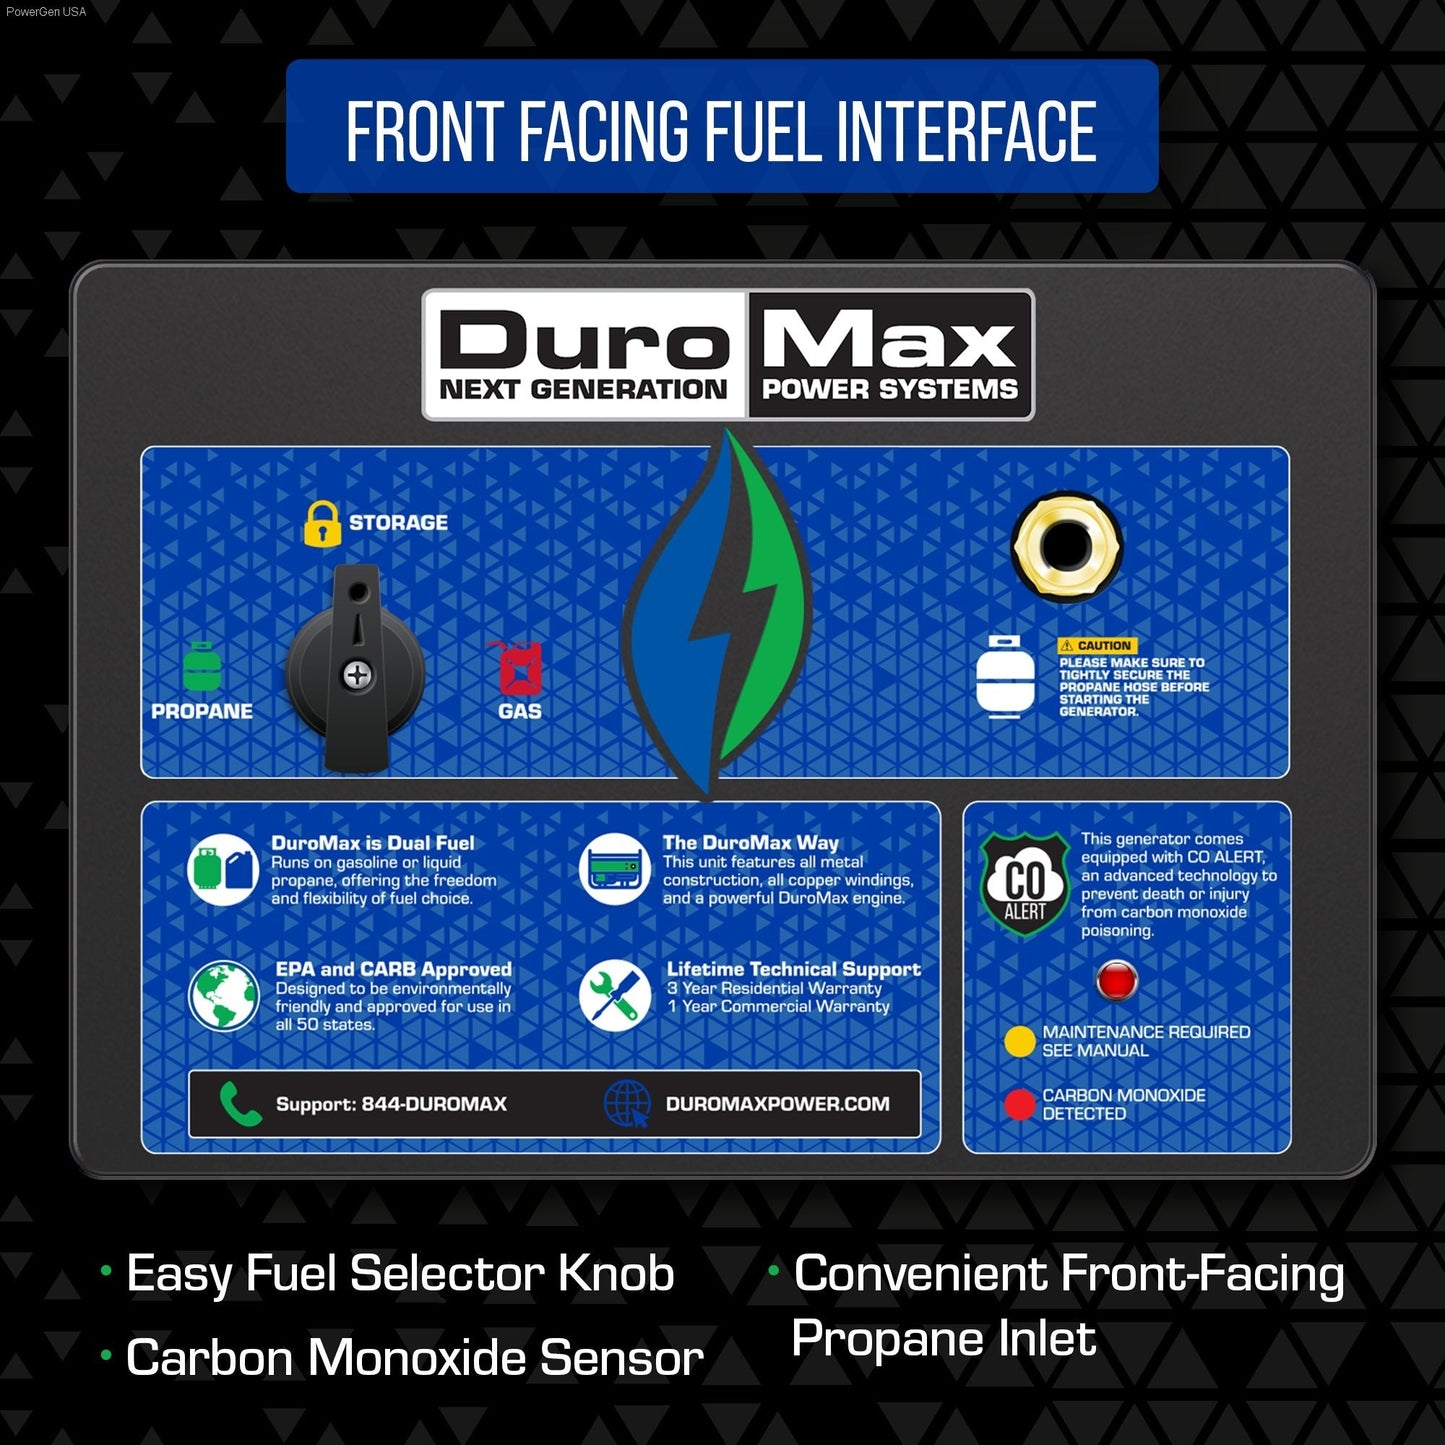 Dual Fuel Hybrid - DuroMax XP12000HX 12,000 Watt Dual Fuel Portable Home Power Backup HX Generator W/ CO Alert